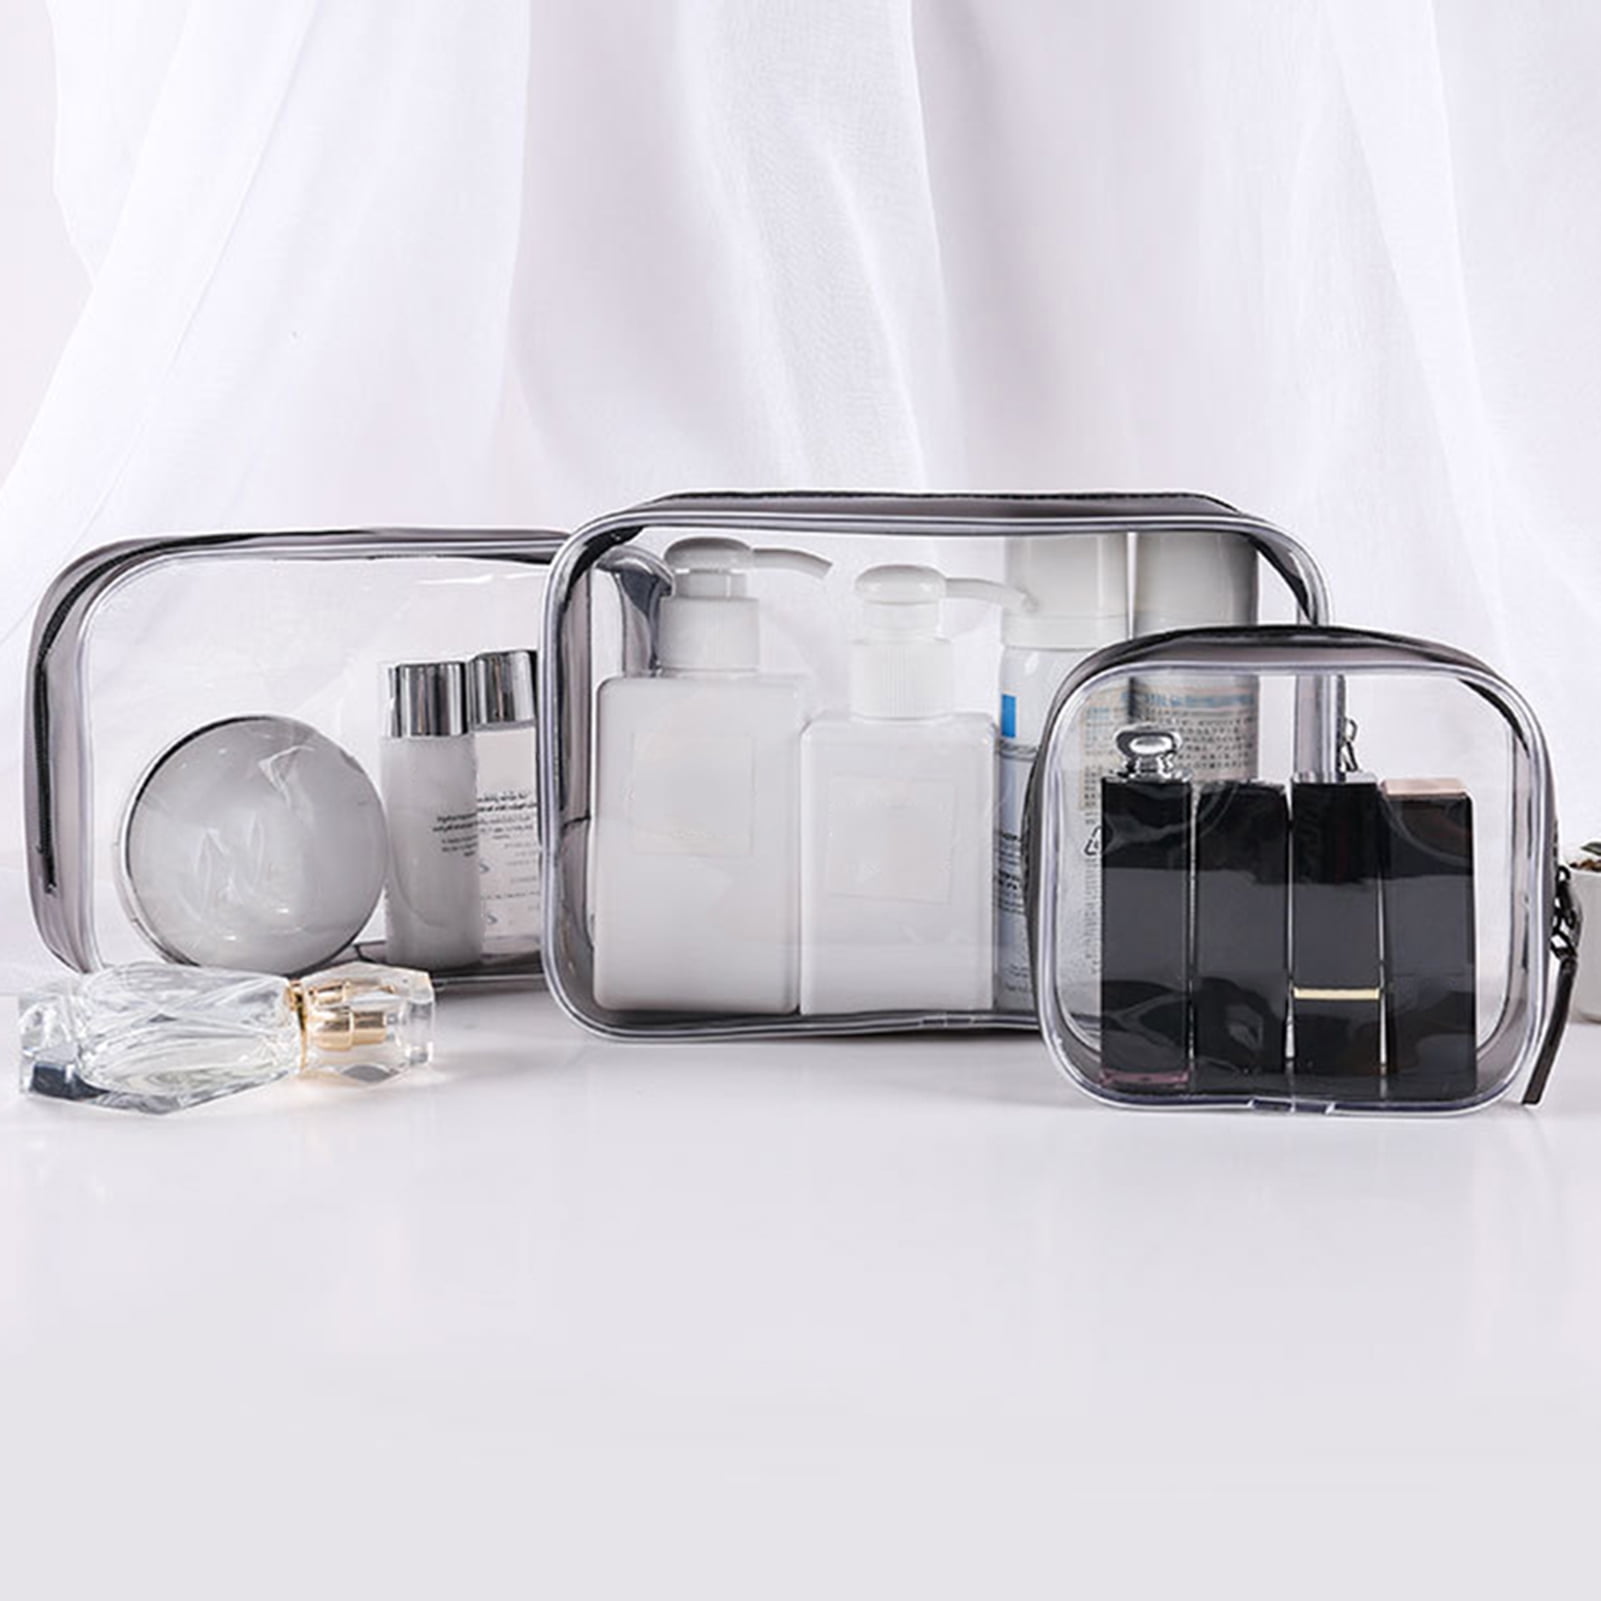 Wobe 2 Pack Portable Clear Makeup Bag Zipper Waterproof Cosmetics